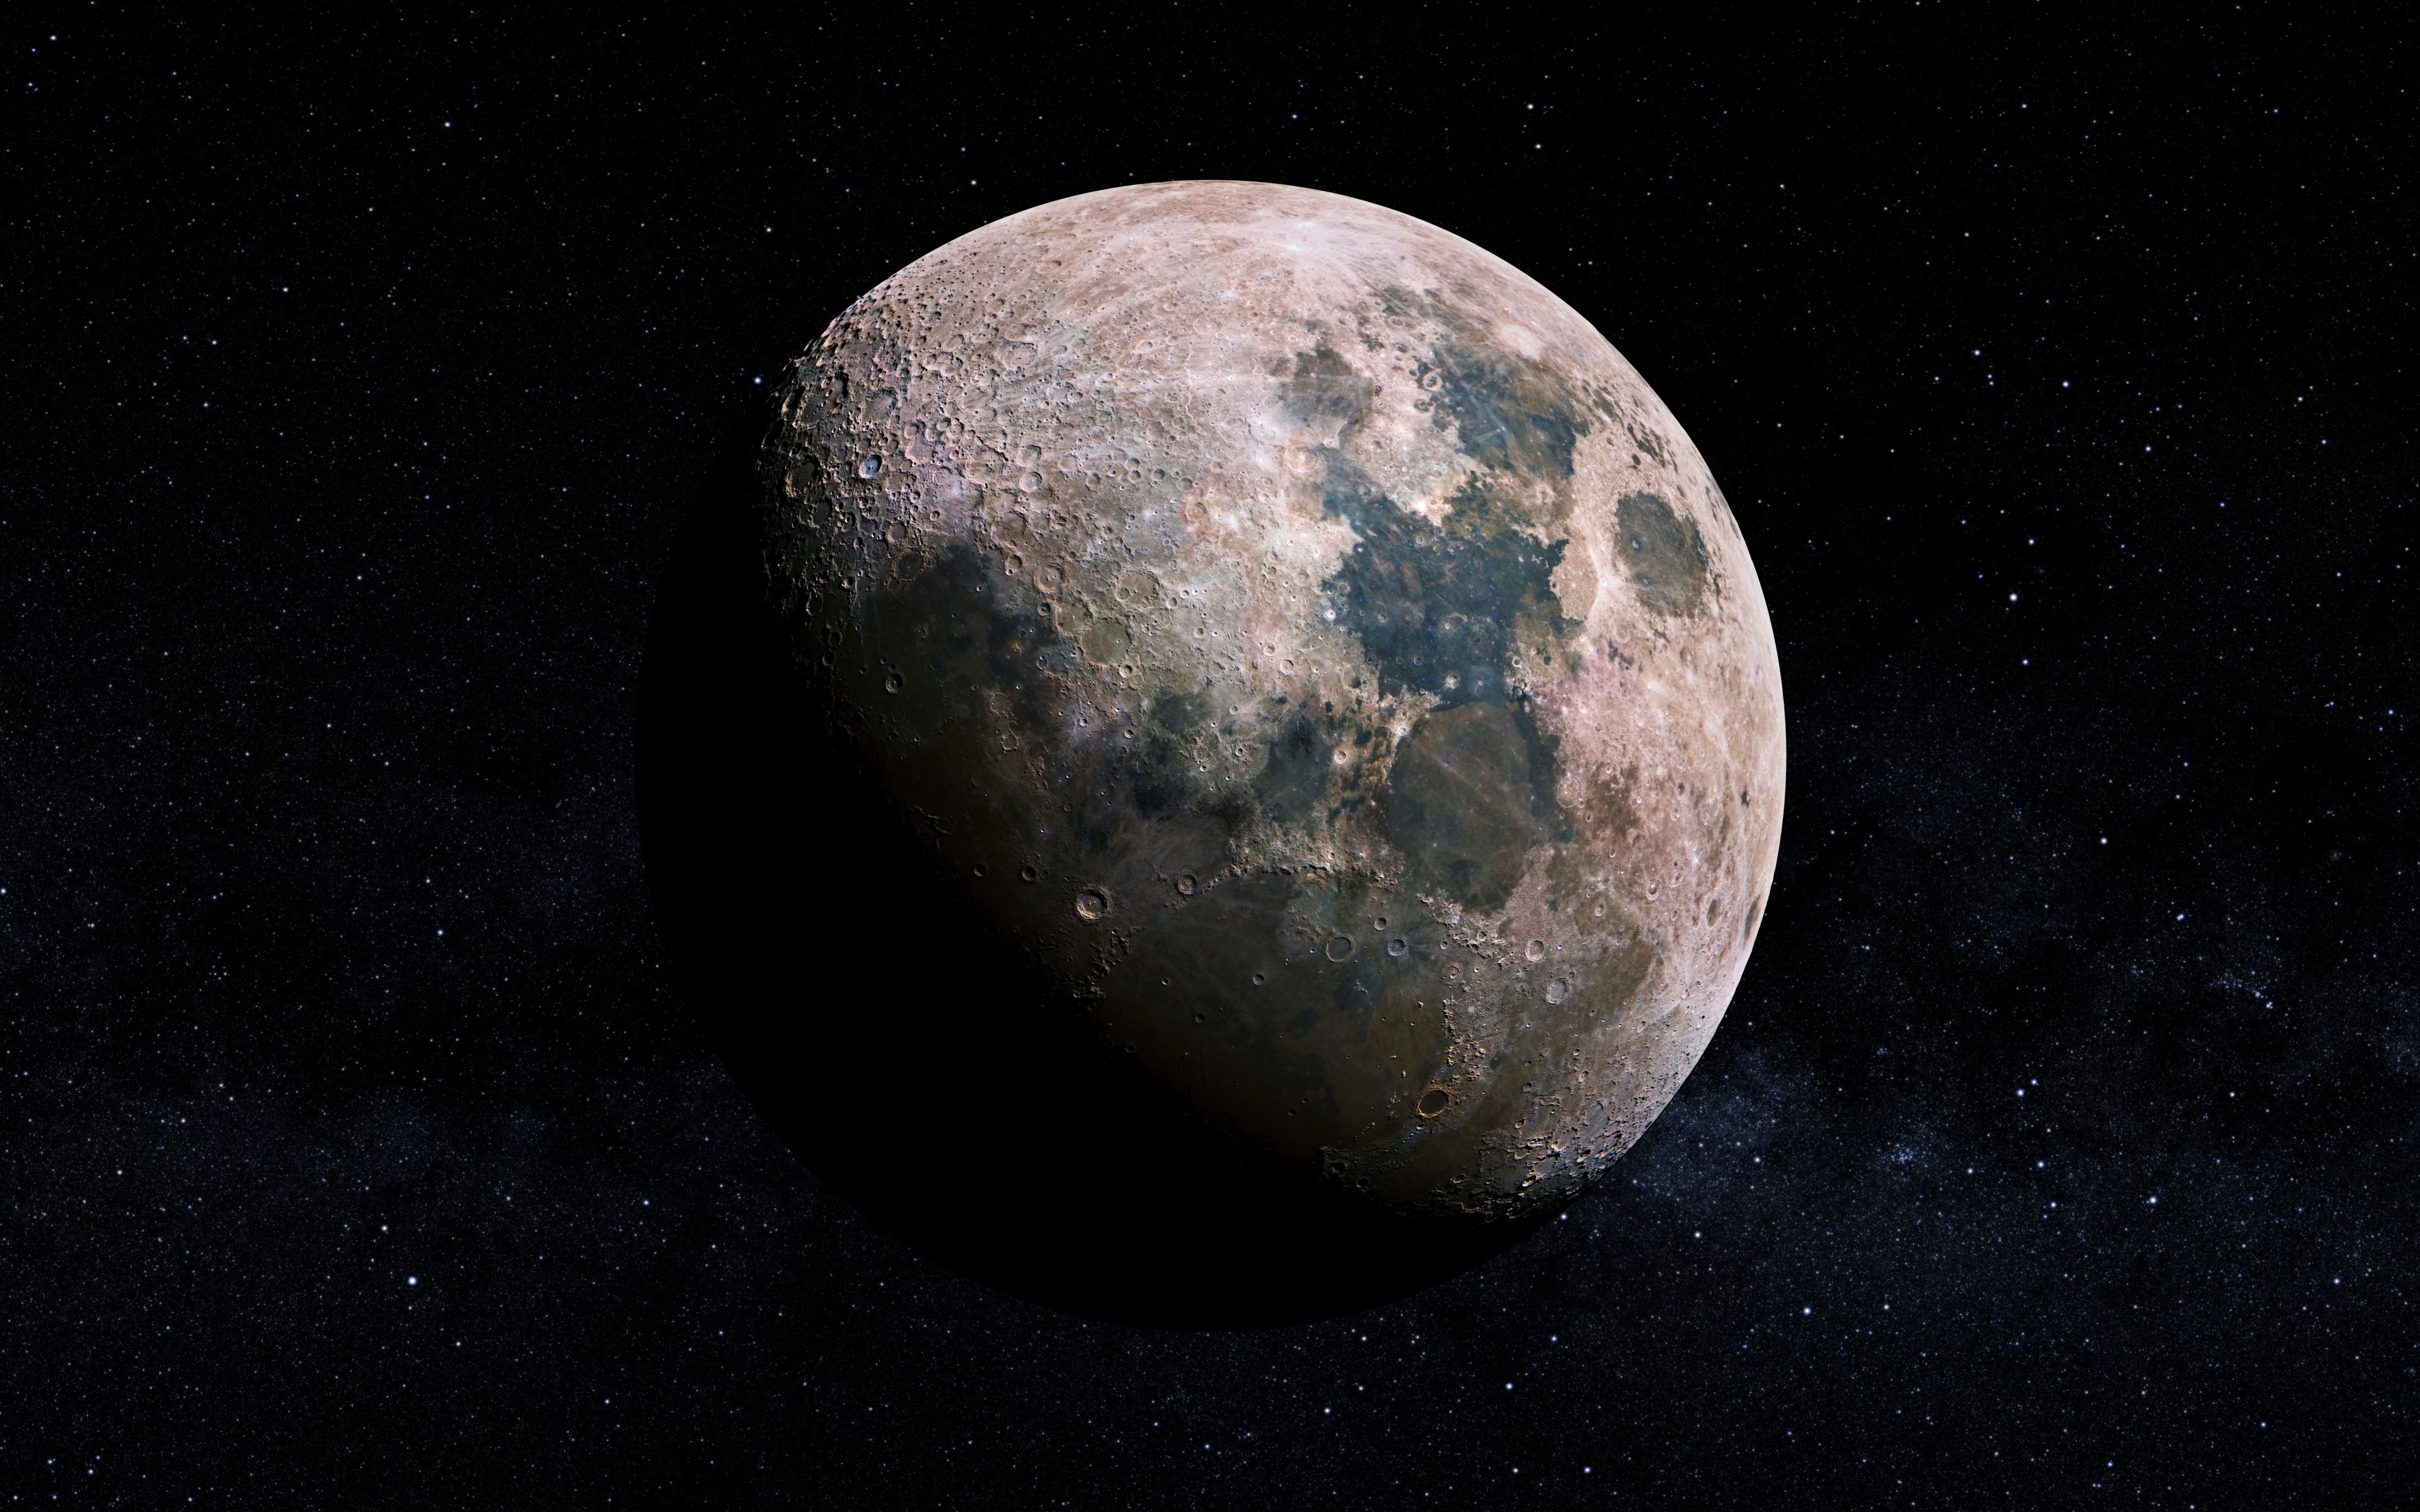 Moon 4k, HD World, 4k Wallpaper, Image, Background, Photo